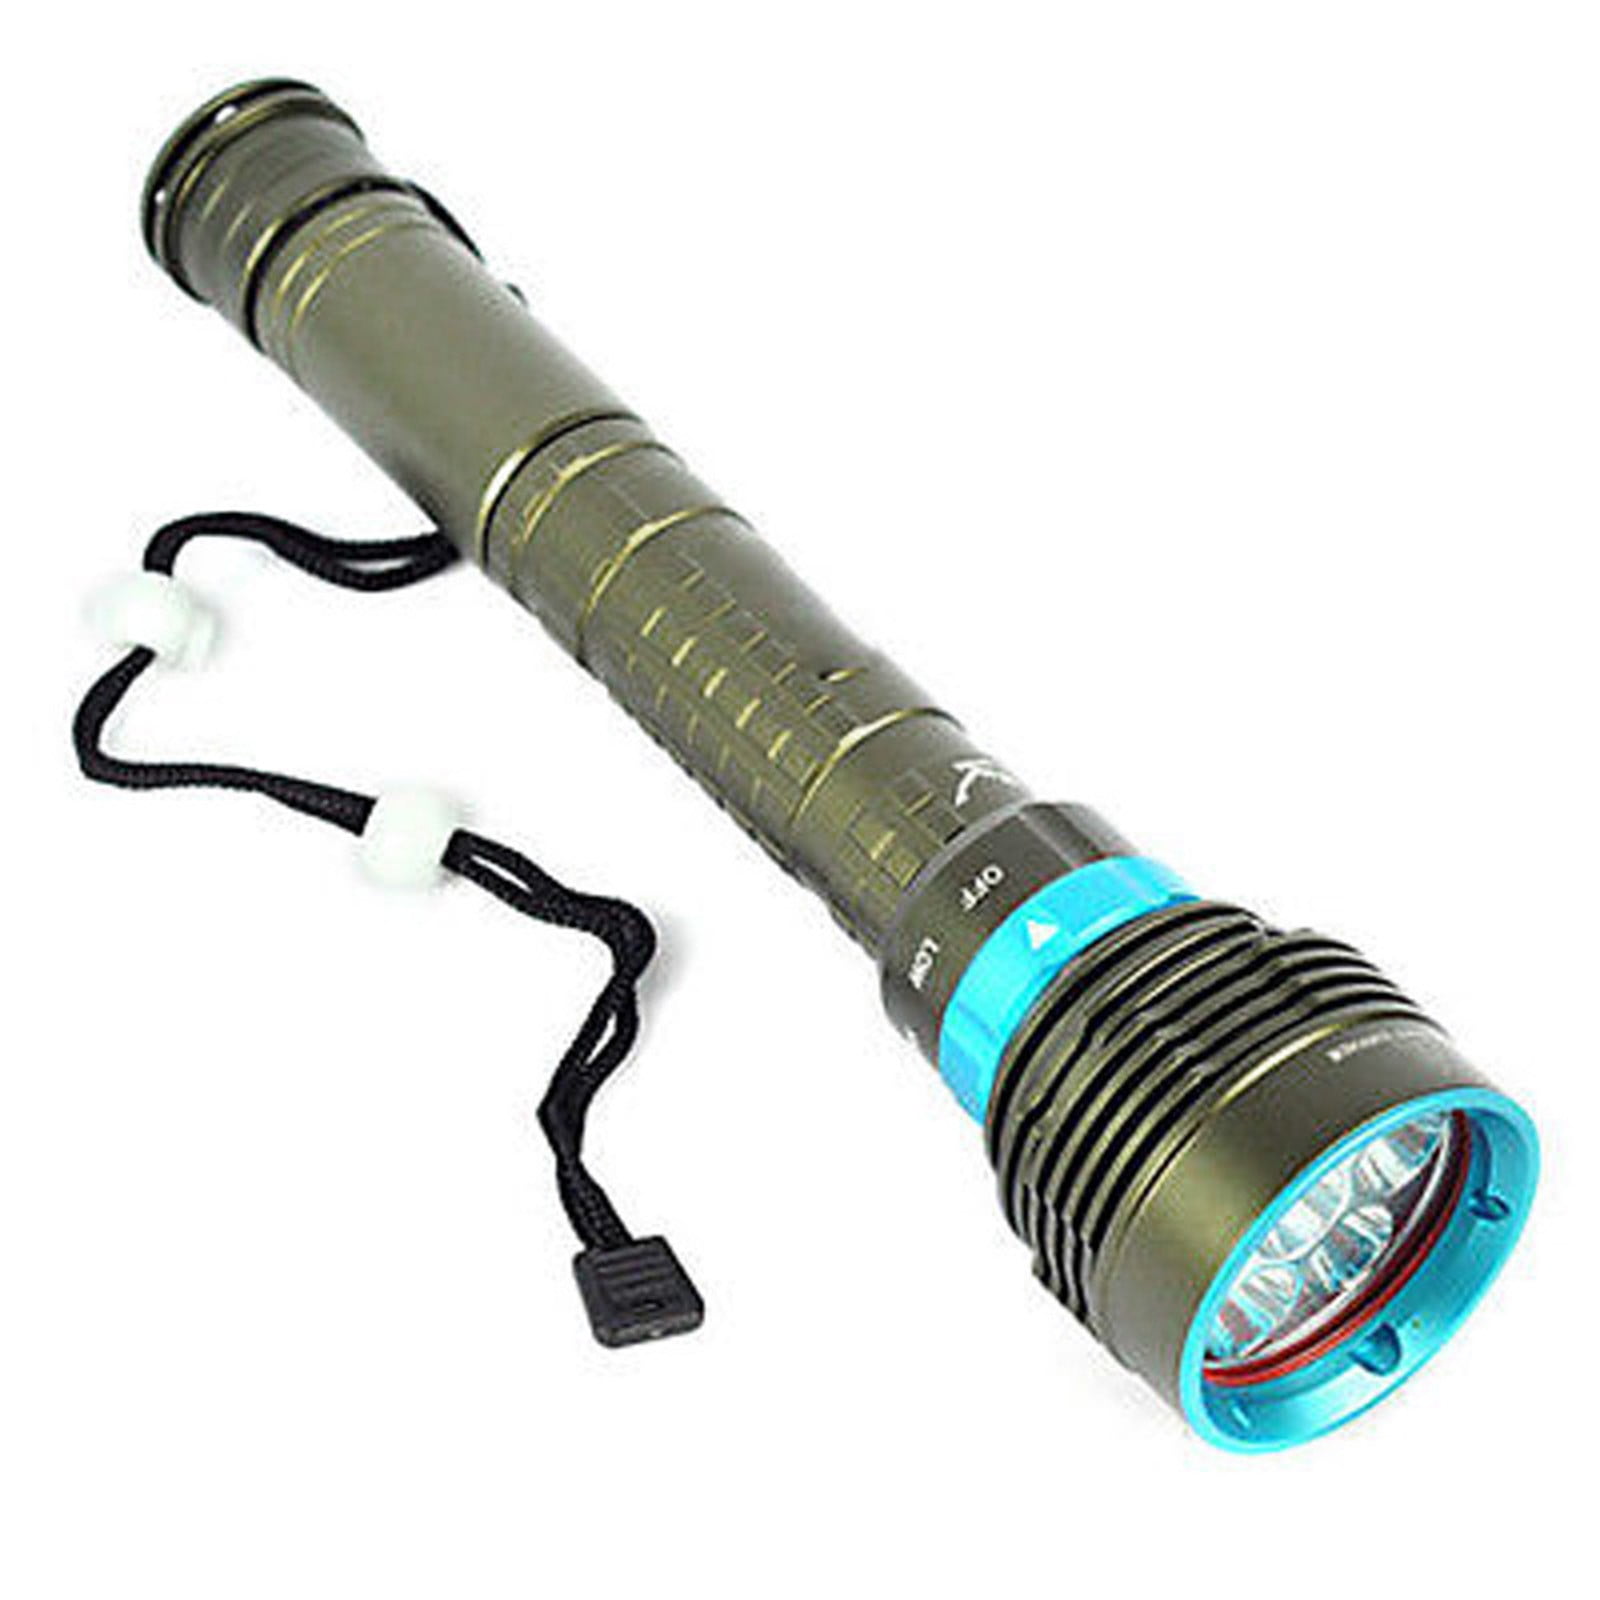 Diving Light Underwater 20000LM 4x XM-L T6 LED Flashlight Dive Torch 18650/26650 